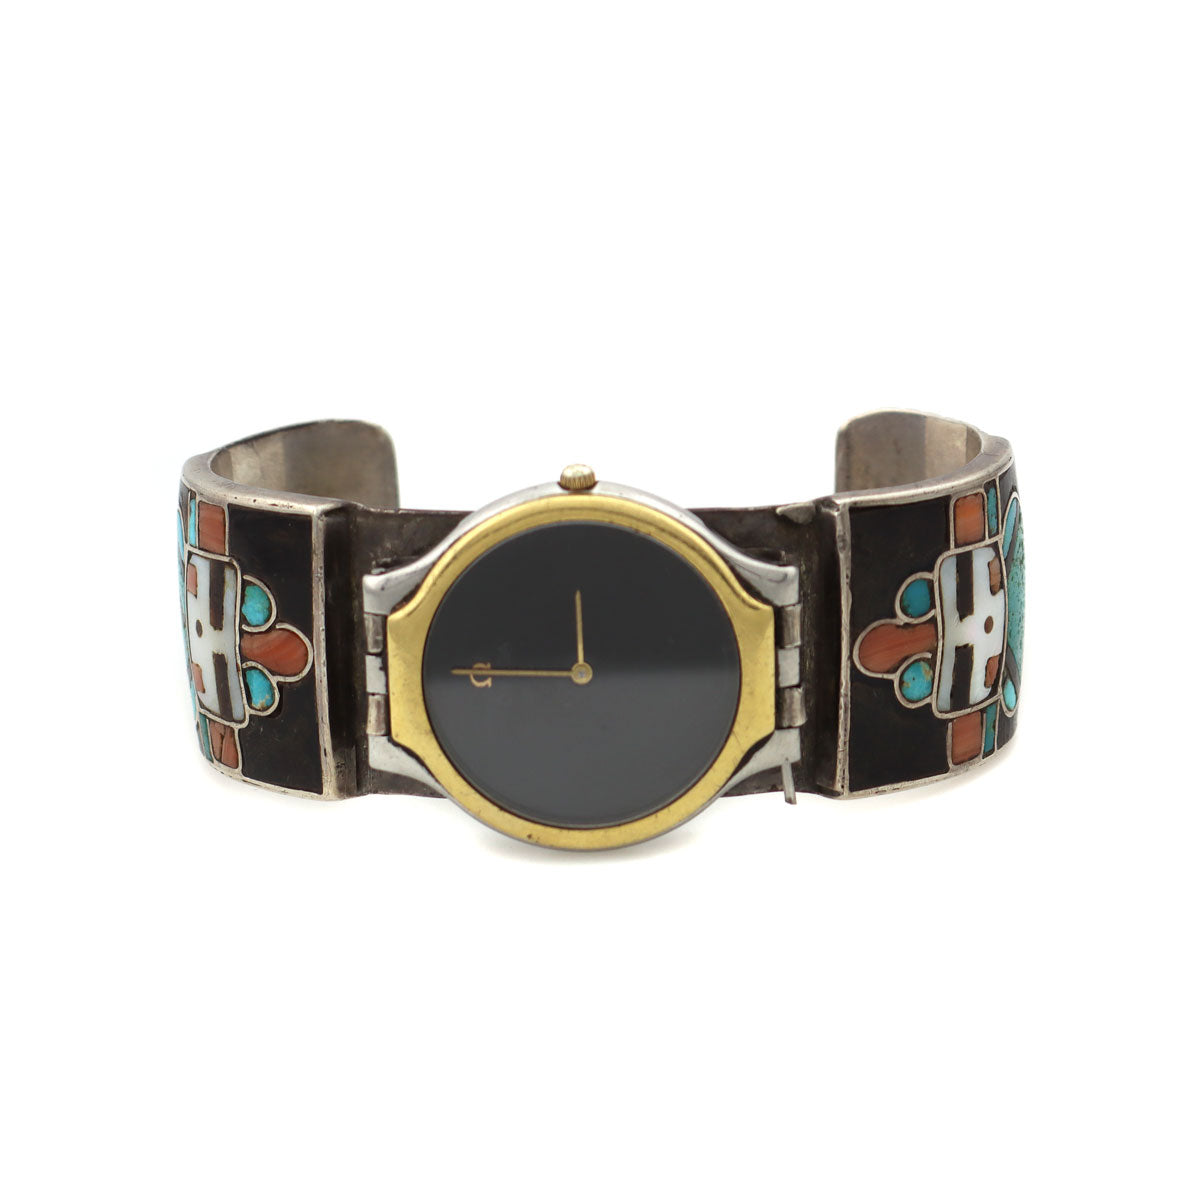 Zuni Multi-Stone Inlay and Silver Watch Cuff with Kachina Design c. 1940s, size 7 (J91051-0821-024)1